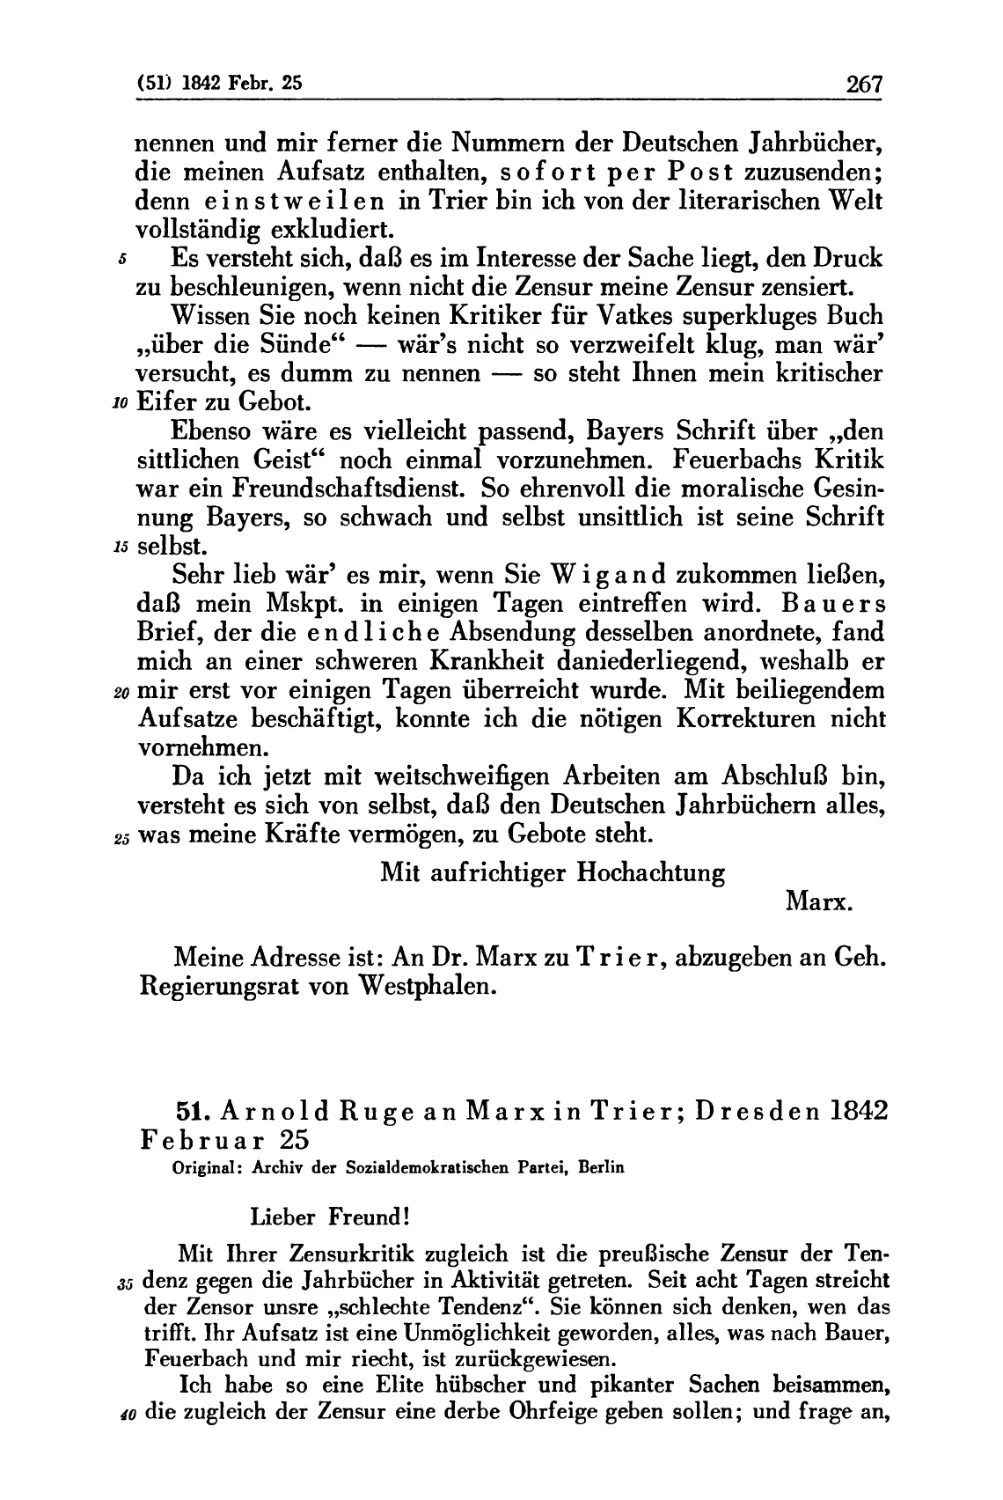 51. Arnold Ruge an Marx in Trier; Dresden 1842 Februar 25